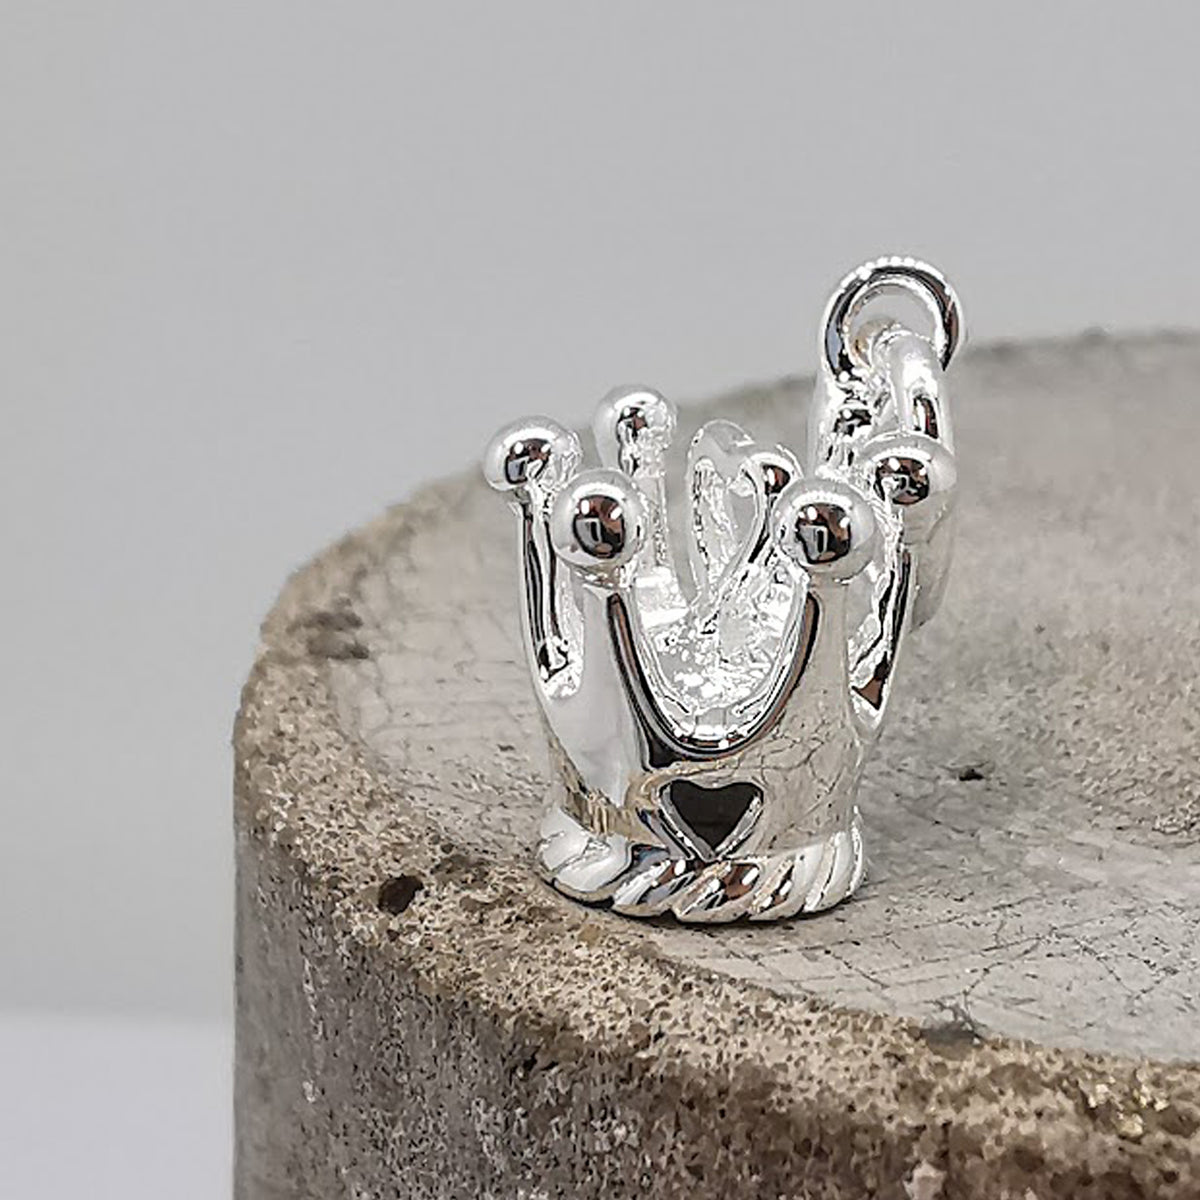 silver crown charm coronation for bracelet or pendant